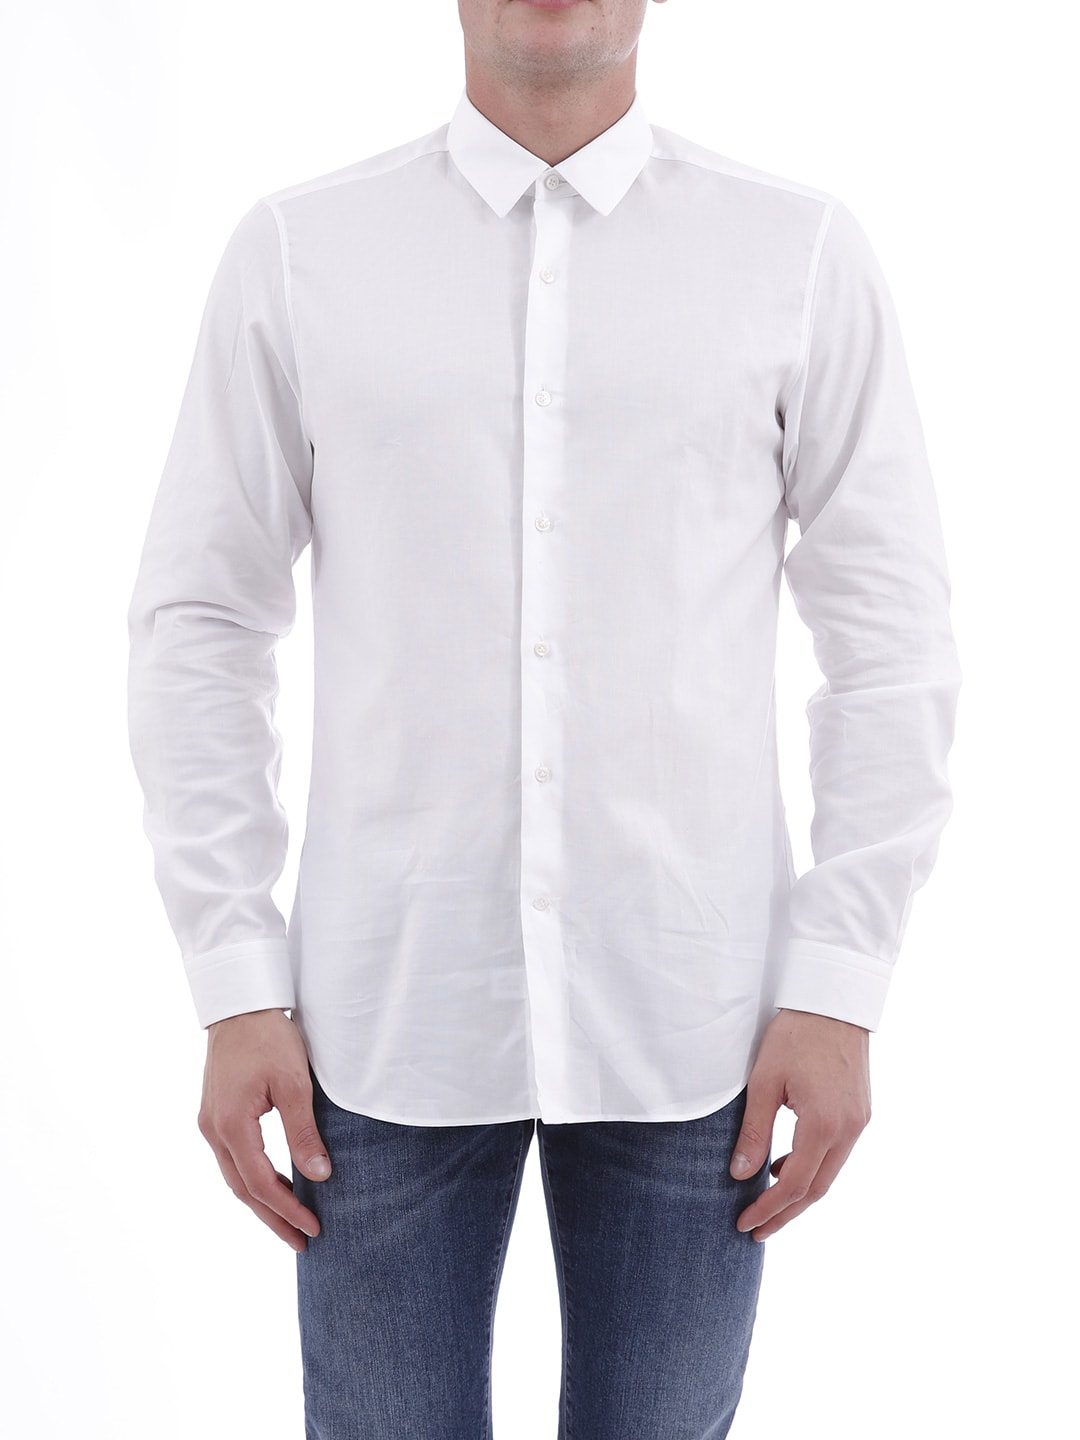 Vangher White Shirt